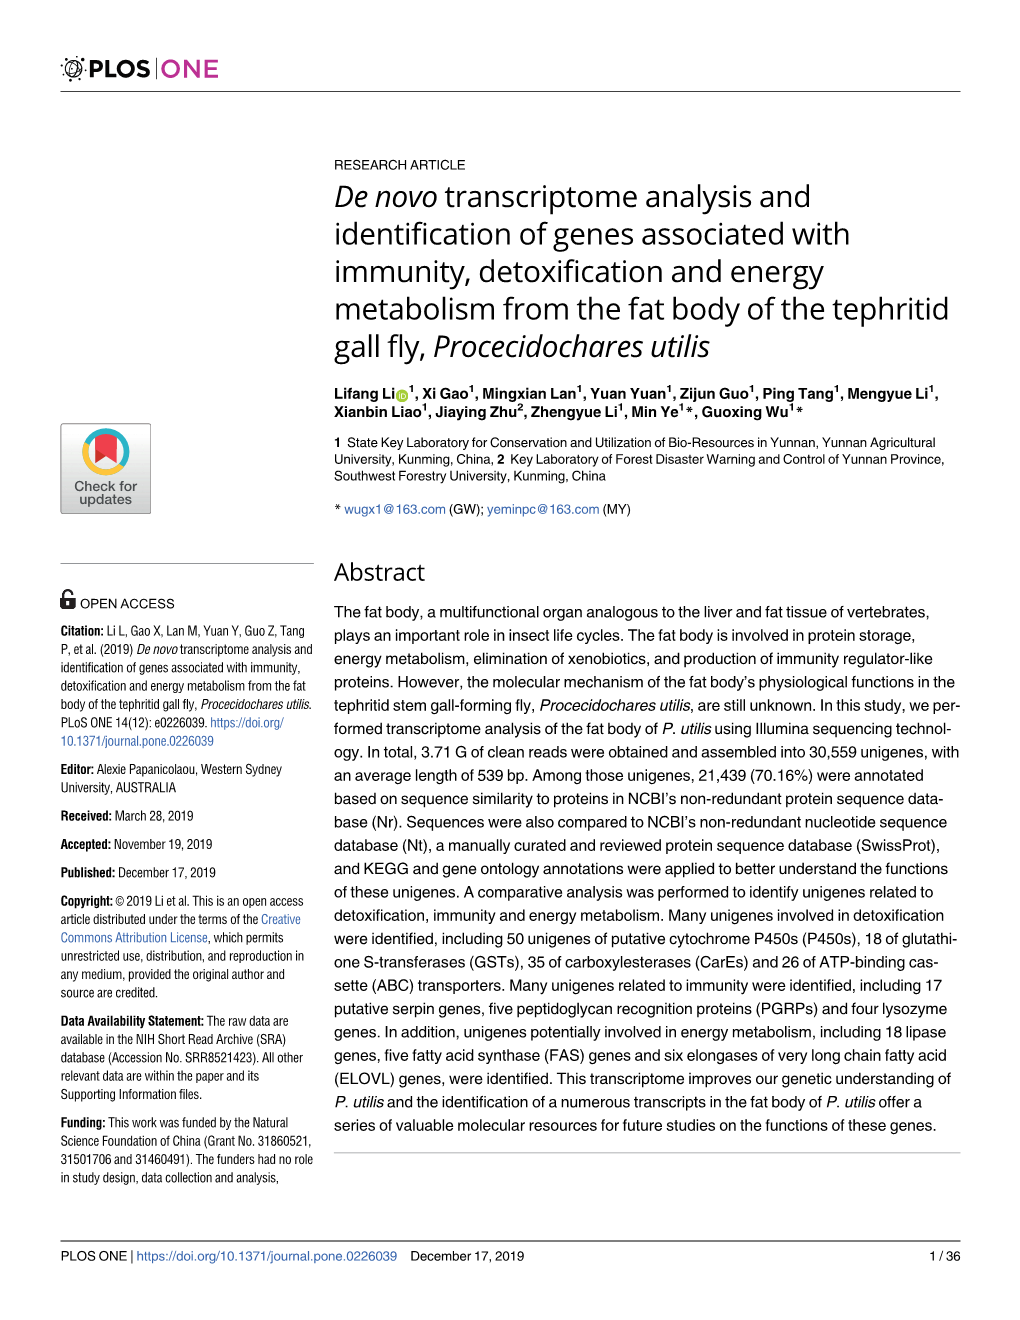 De Novo Transcriptome Analysis and Identification of Genes Associated